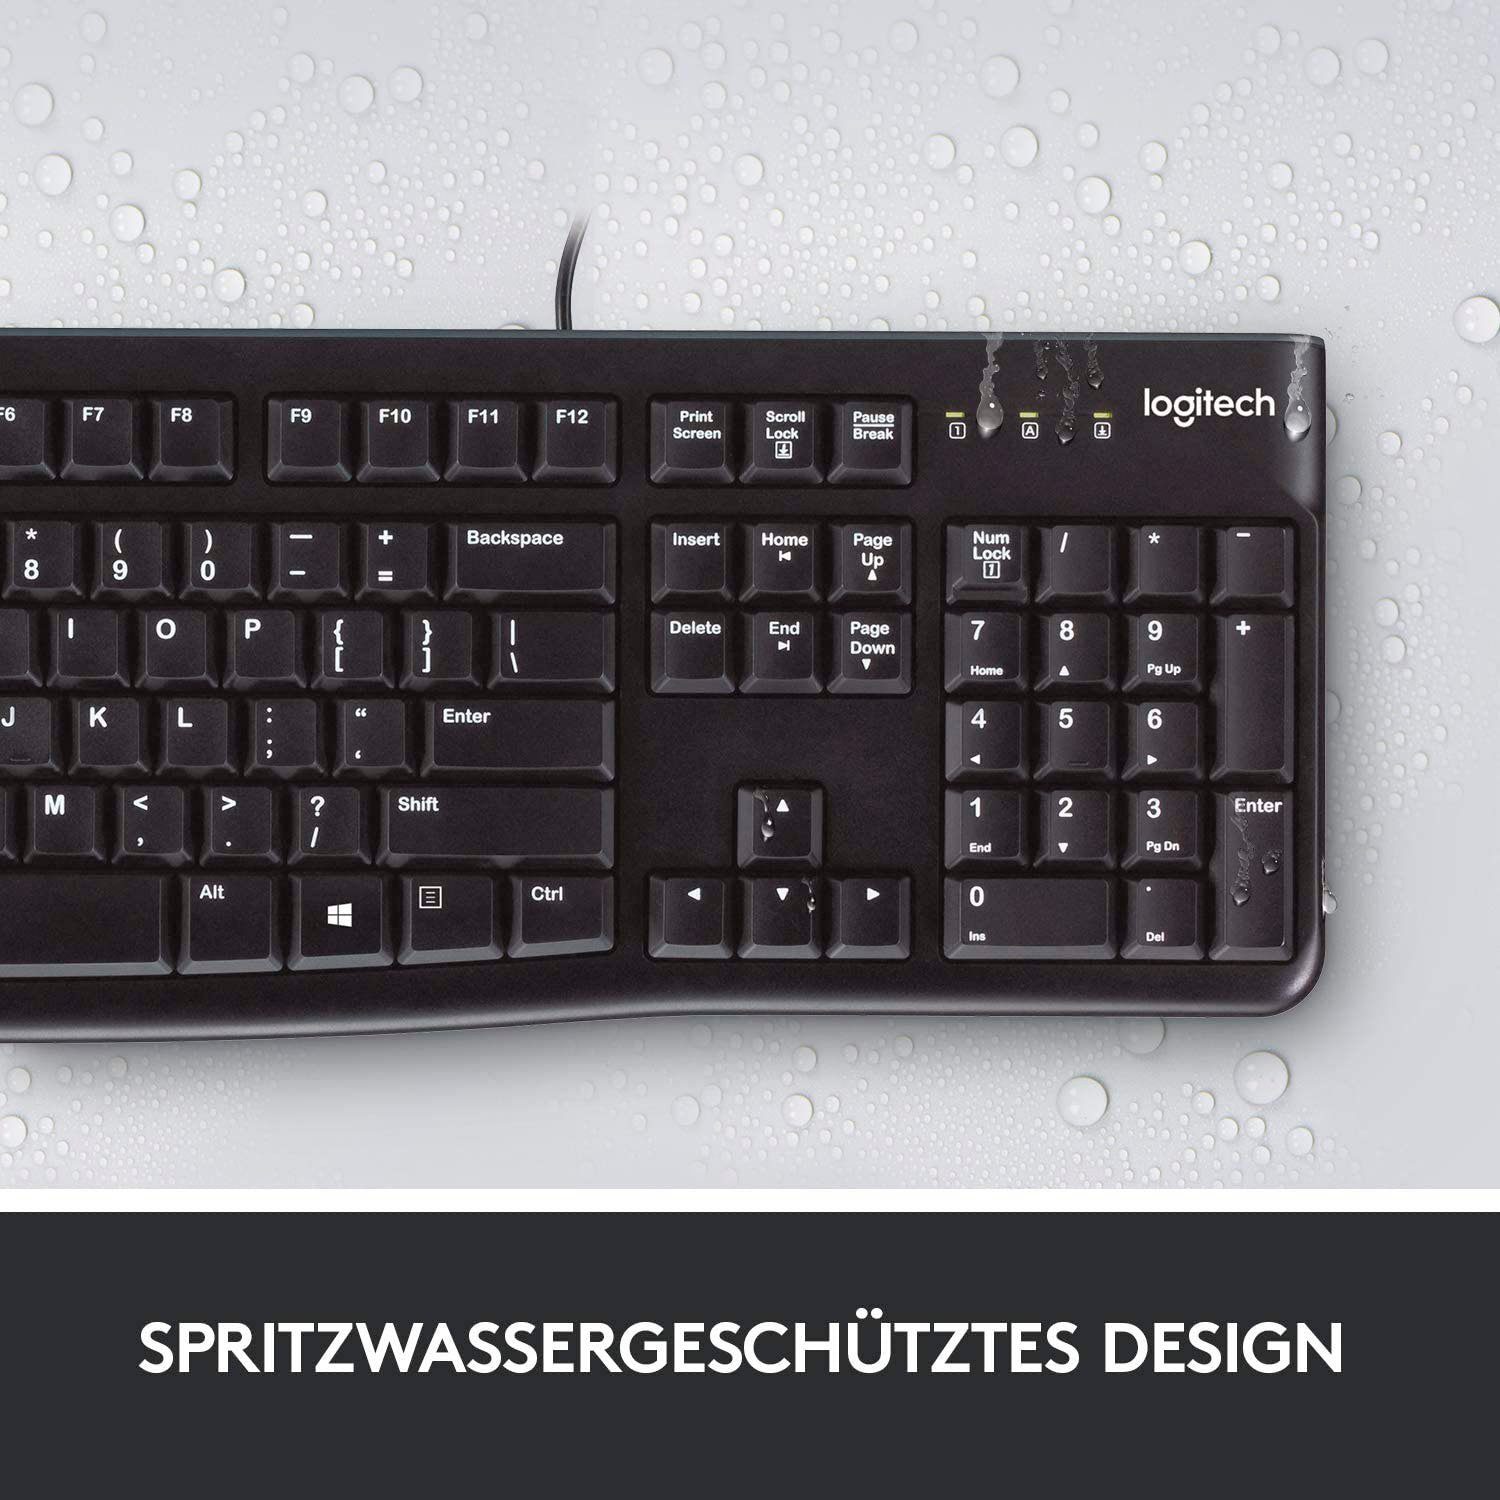 Logitech PC-Tastatur K120 for Weiss Business Keyboard